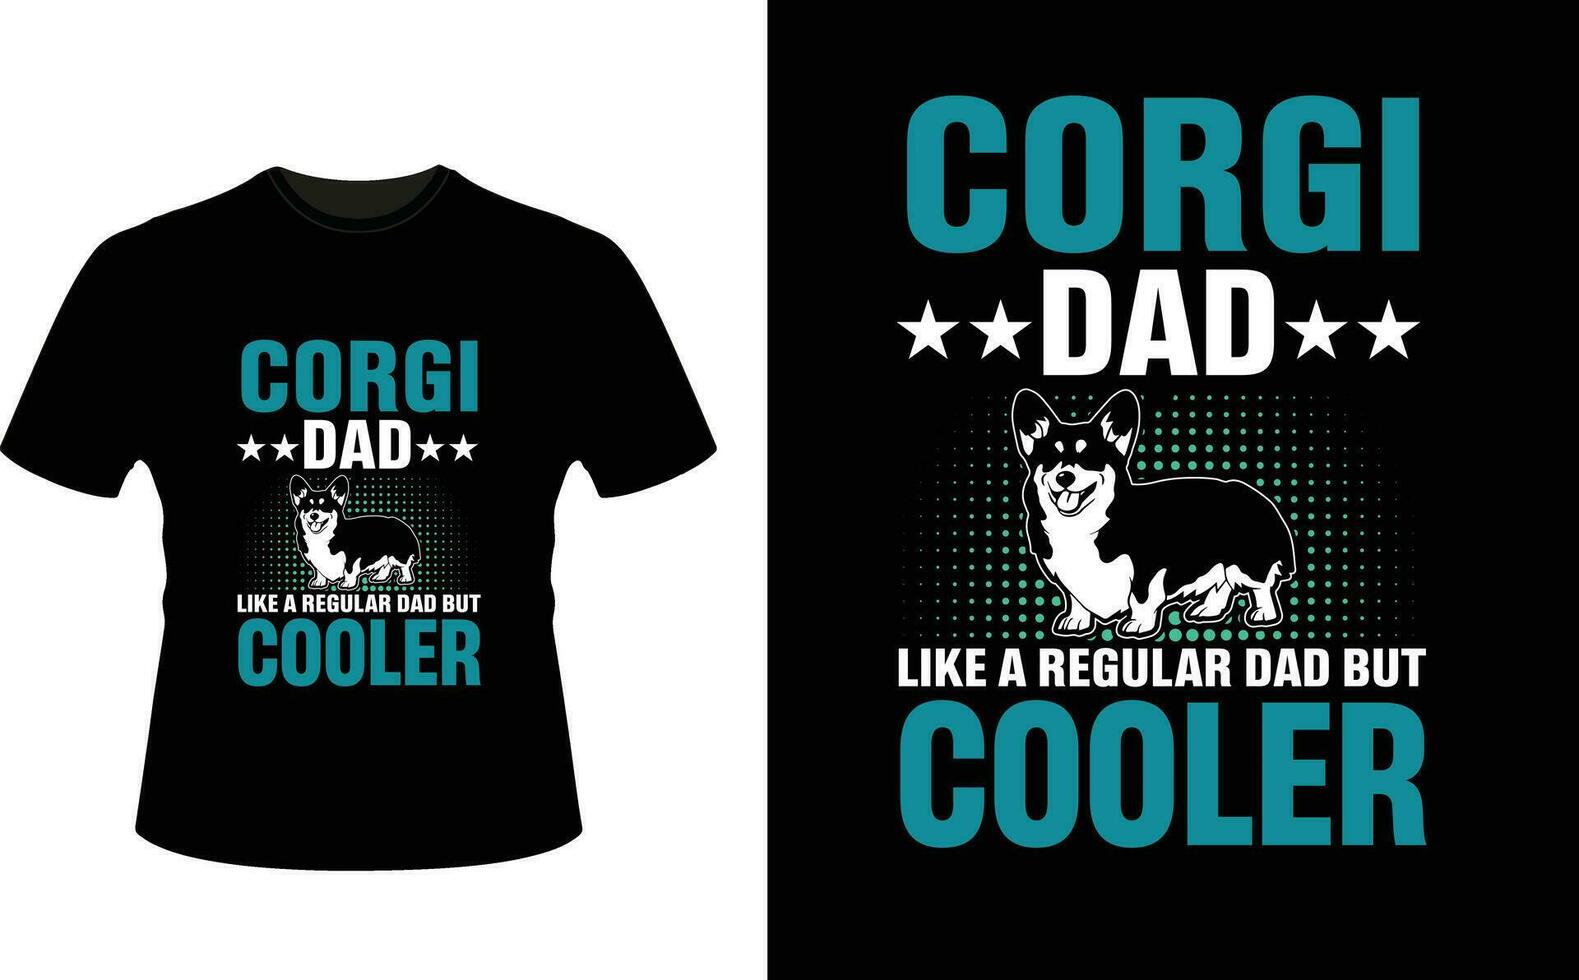 cargi papà piace un' regolare papà ma più fresco o papà papà maglietta design o padre giorno t camicia design vettore